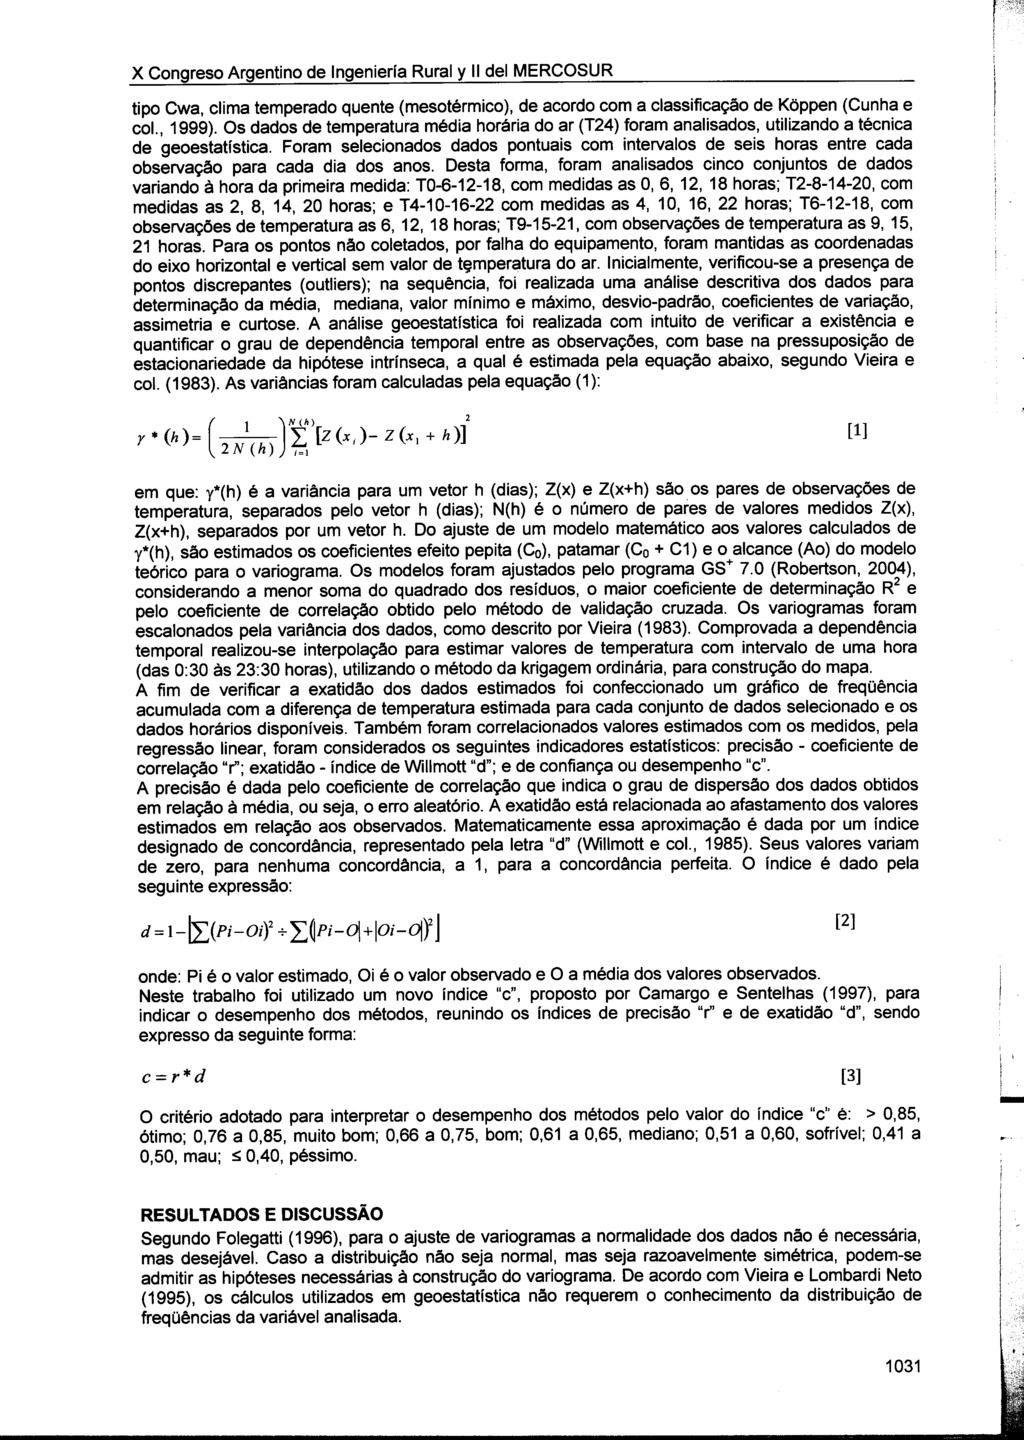 X Congreso Argentino de Ingeniería Rural y 11 dei MERCOSUR tipo Cwa, clima temperado quente (mesotérmico), de acordo com a classificação de Kõppen (Cunha e col., 1999).